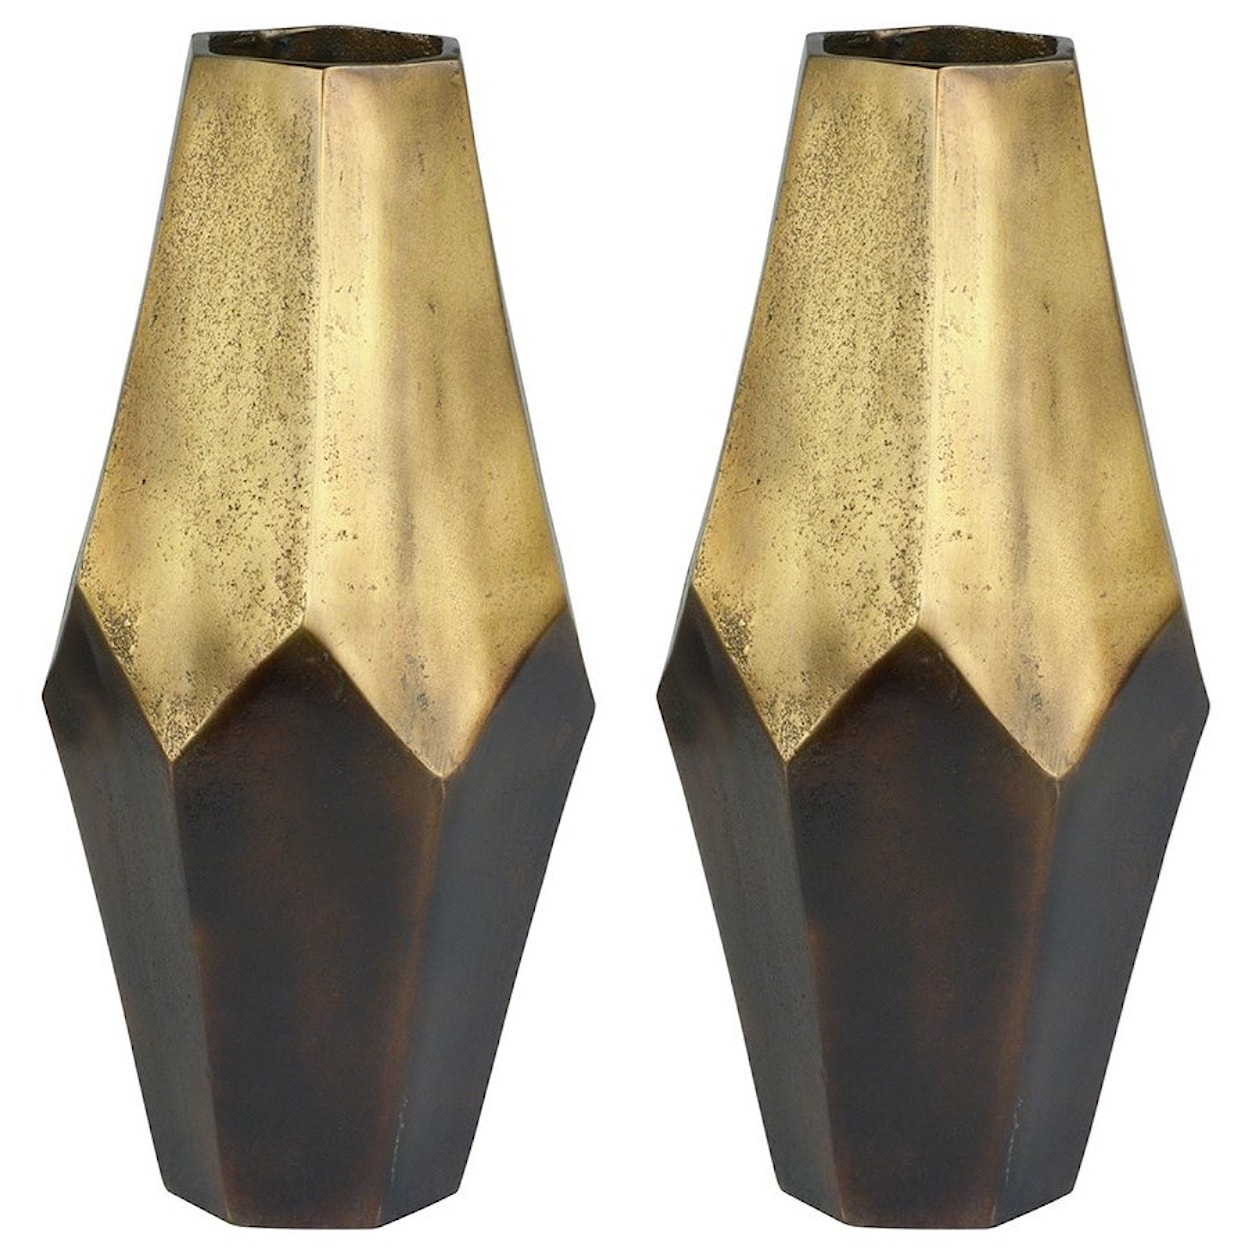 Dovetail Furniture Accessories Vase Set of 2